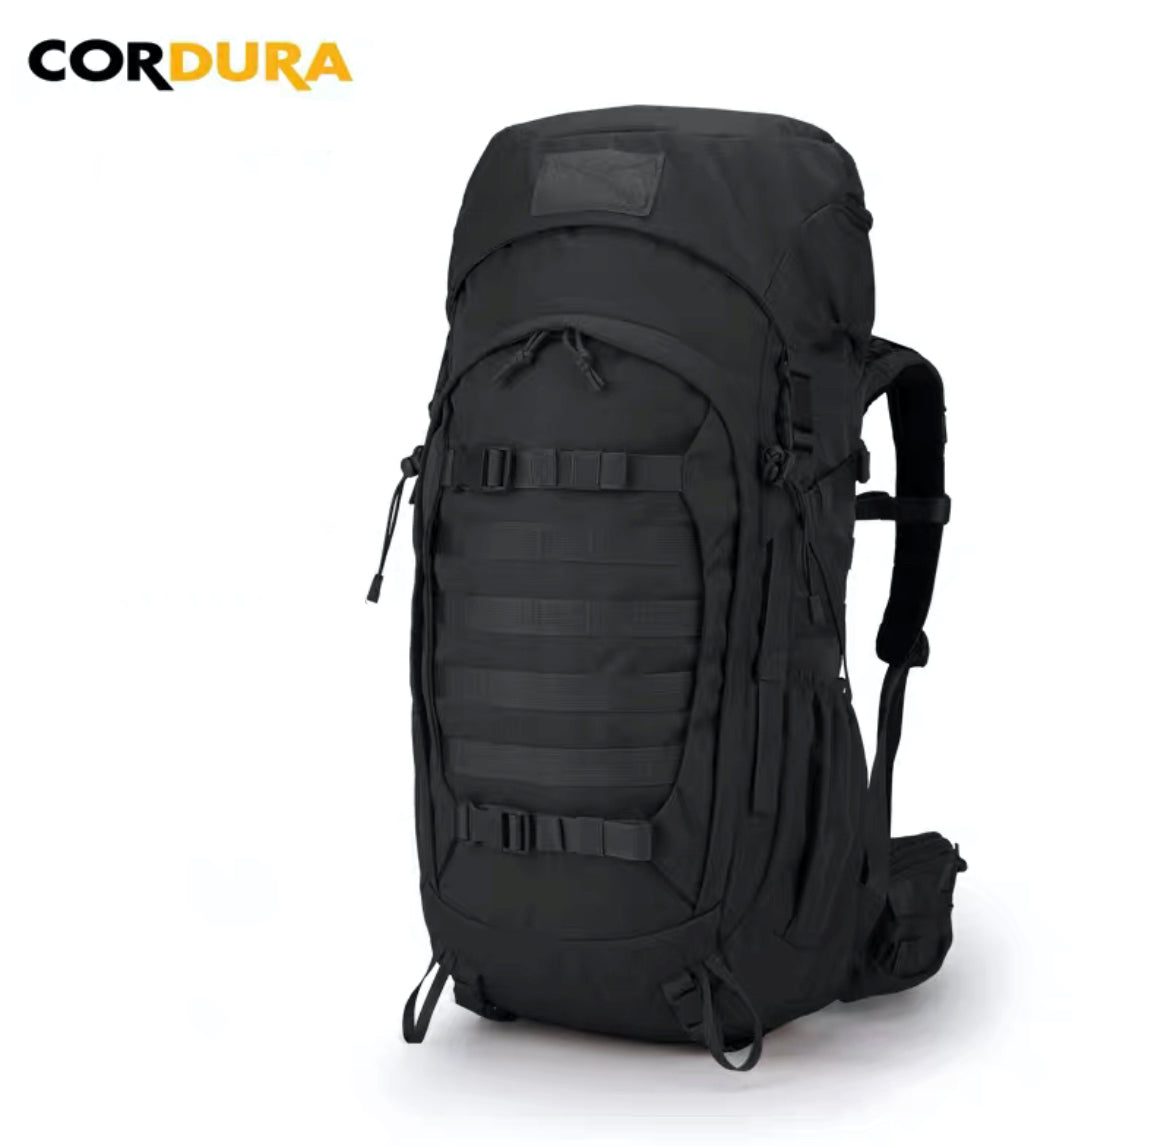 Mardingtop 50L Cordura Molle Hiking Internal Frame Backpacks with Rain Cover